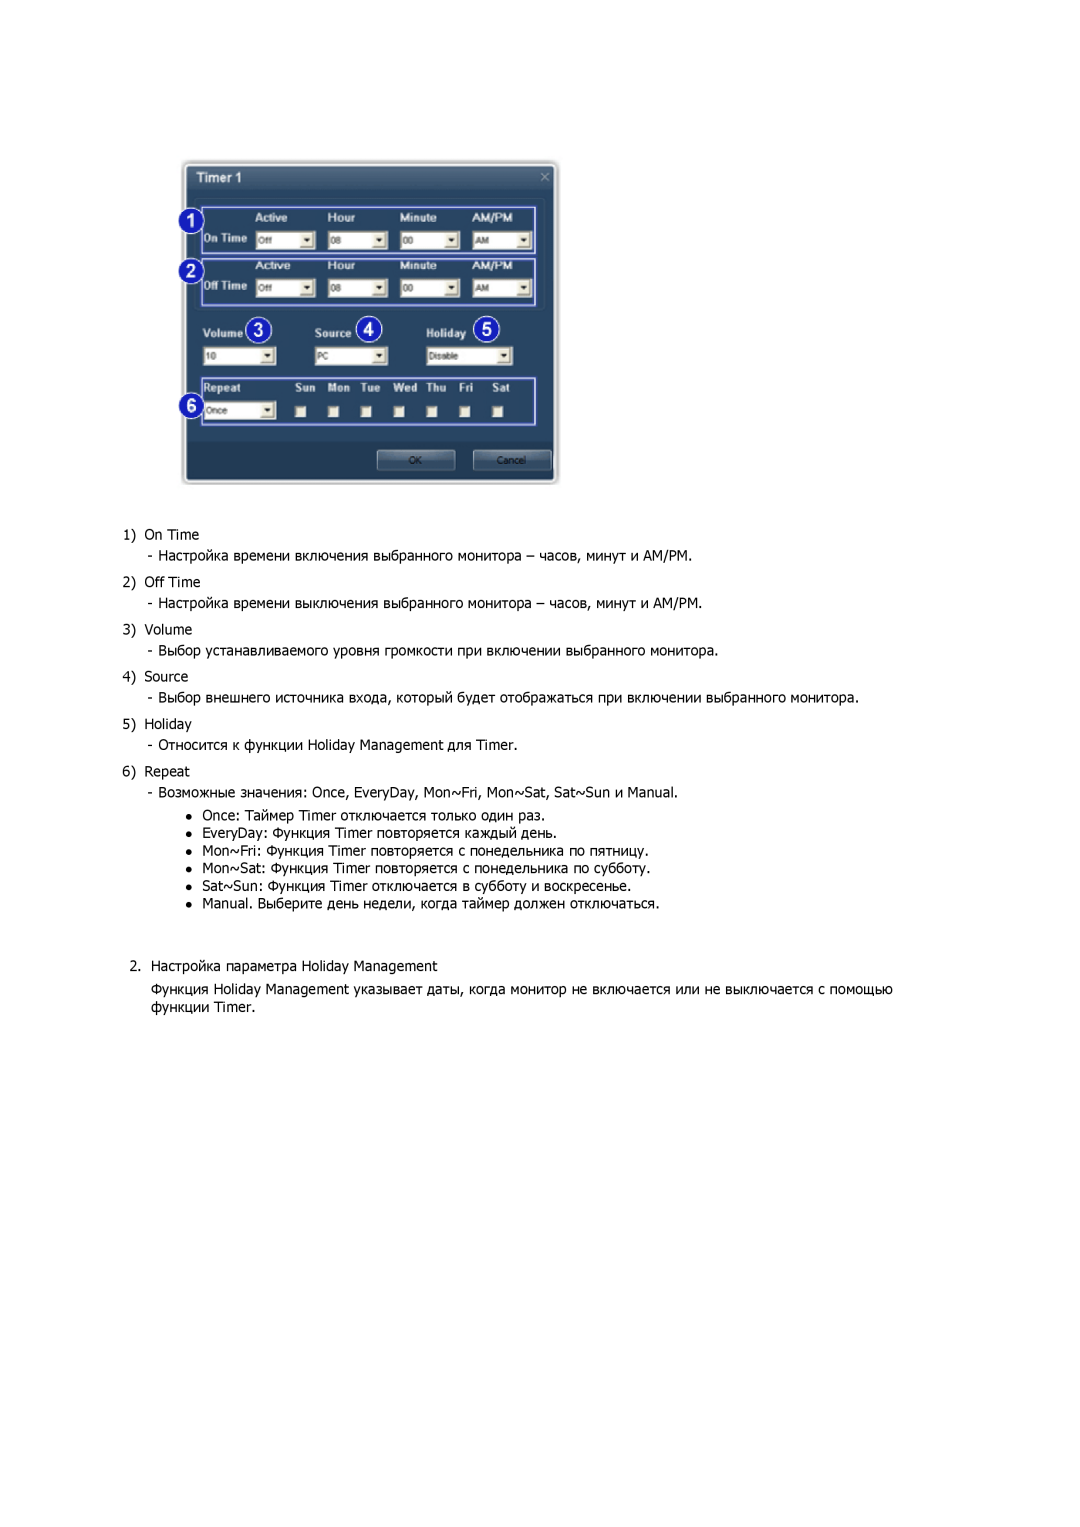 Samsung LH32CRSMBD/EN On Time, Off Time, Volume, Source, Holiday Относится к функции Holiday Management для Timer 6 Repeat 